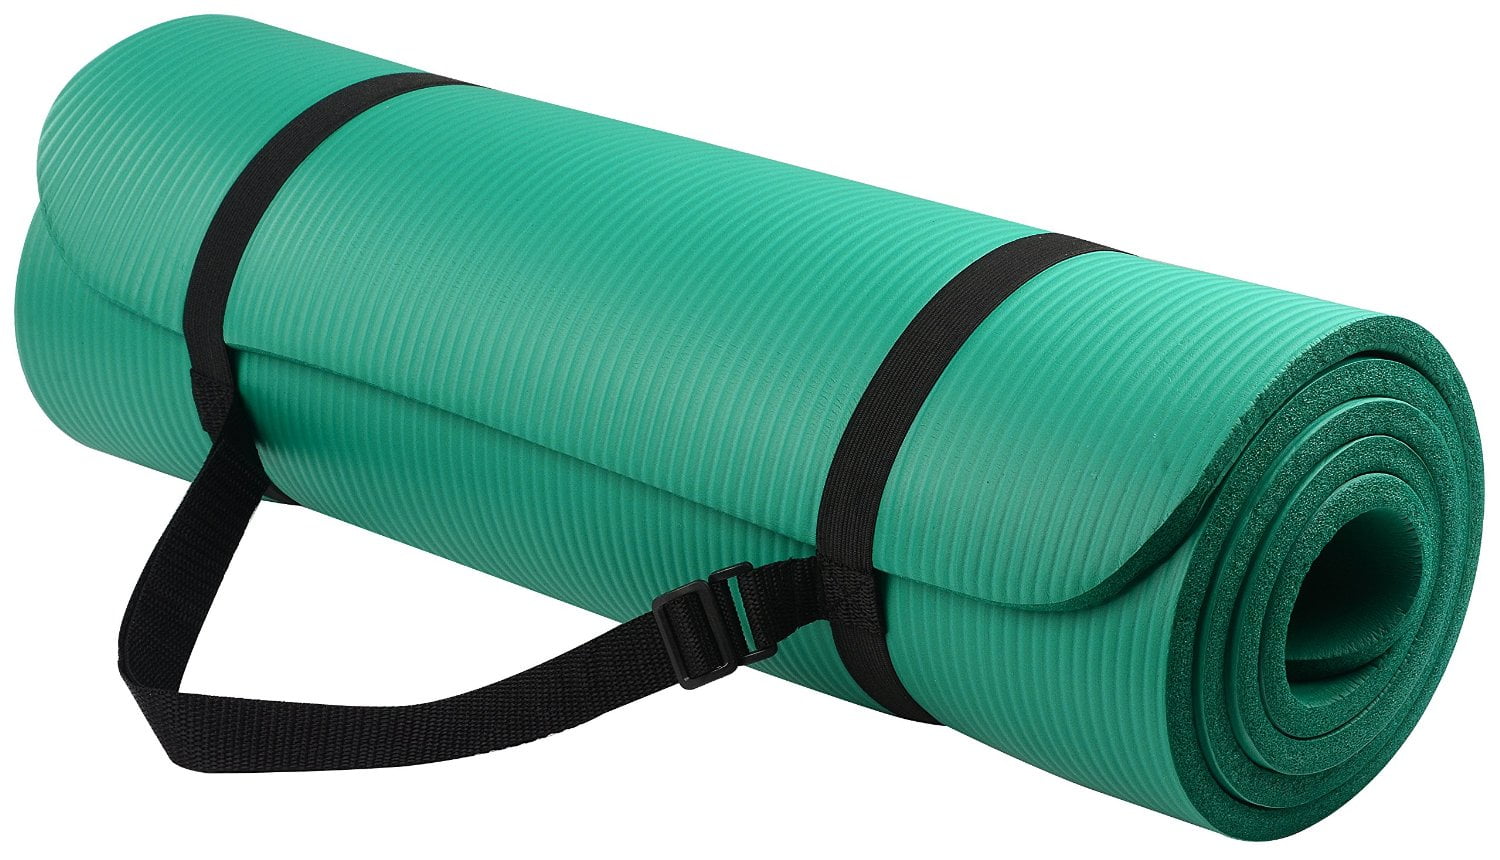 Yoga Mat 6mm Thick High Density PVC Anti-Tear Exercise W/Carrying Strap 72x24 